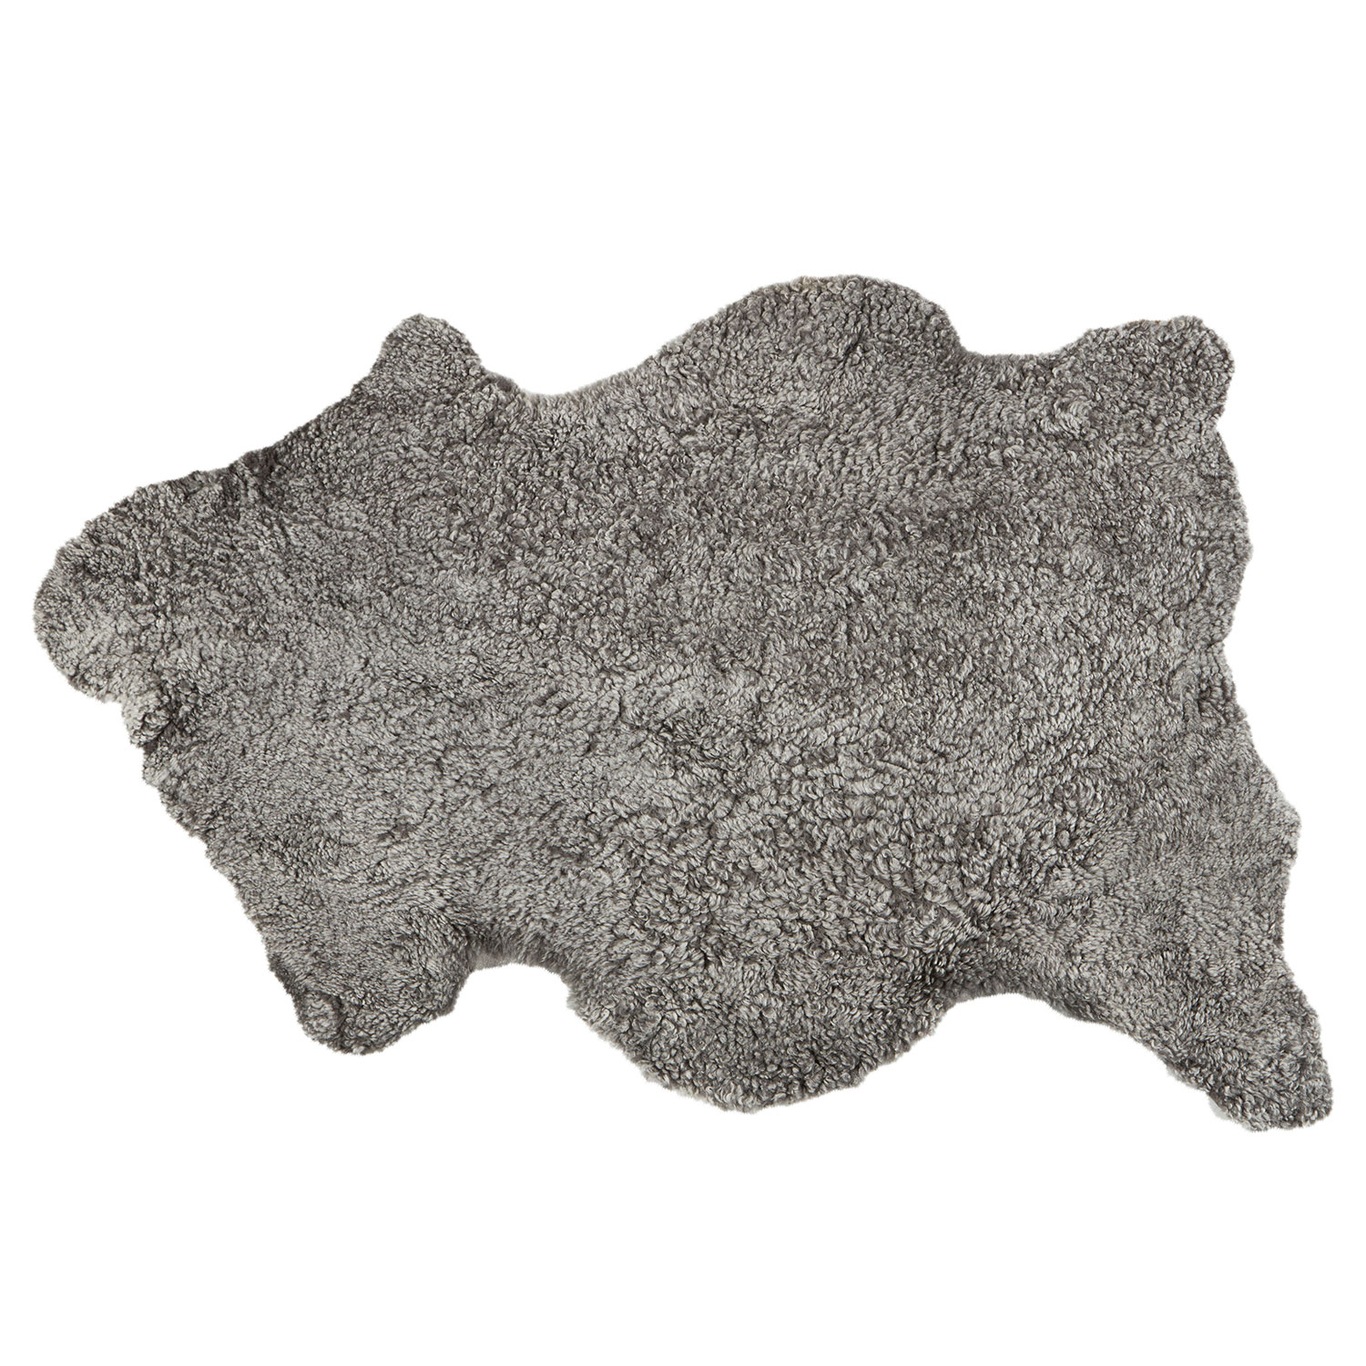 Ella Lampaantalja Lyhytkarvainen 100x60 cm, Grey Graphite